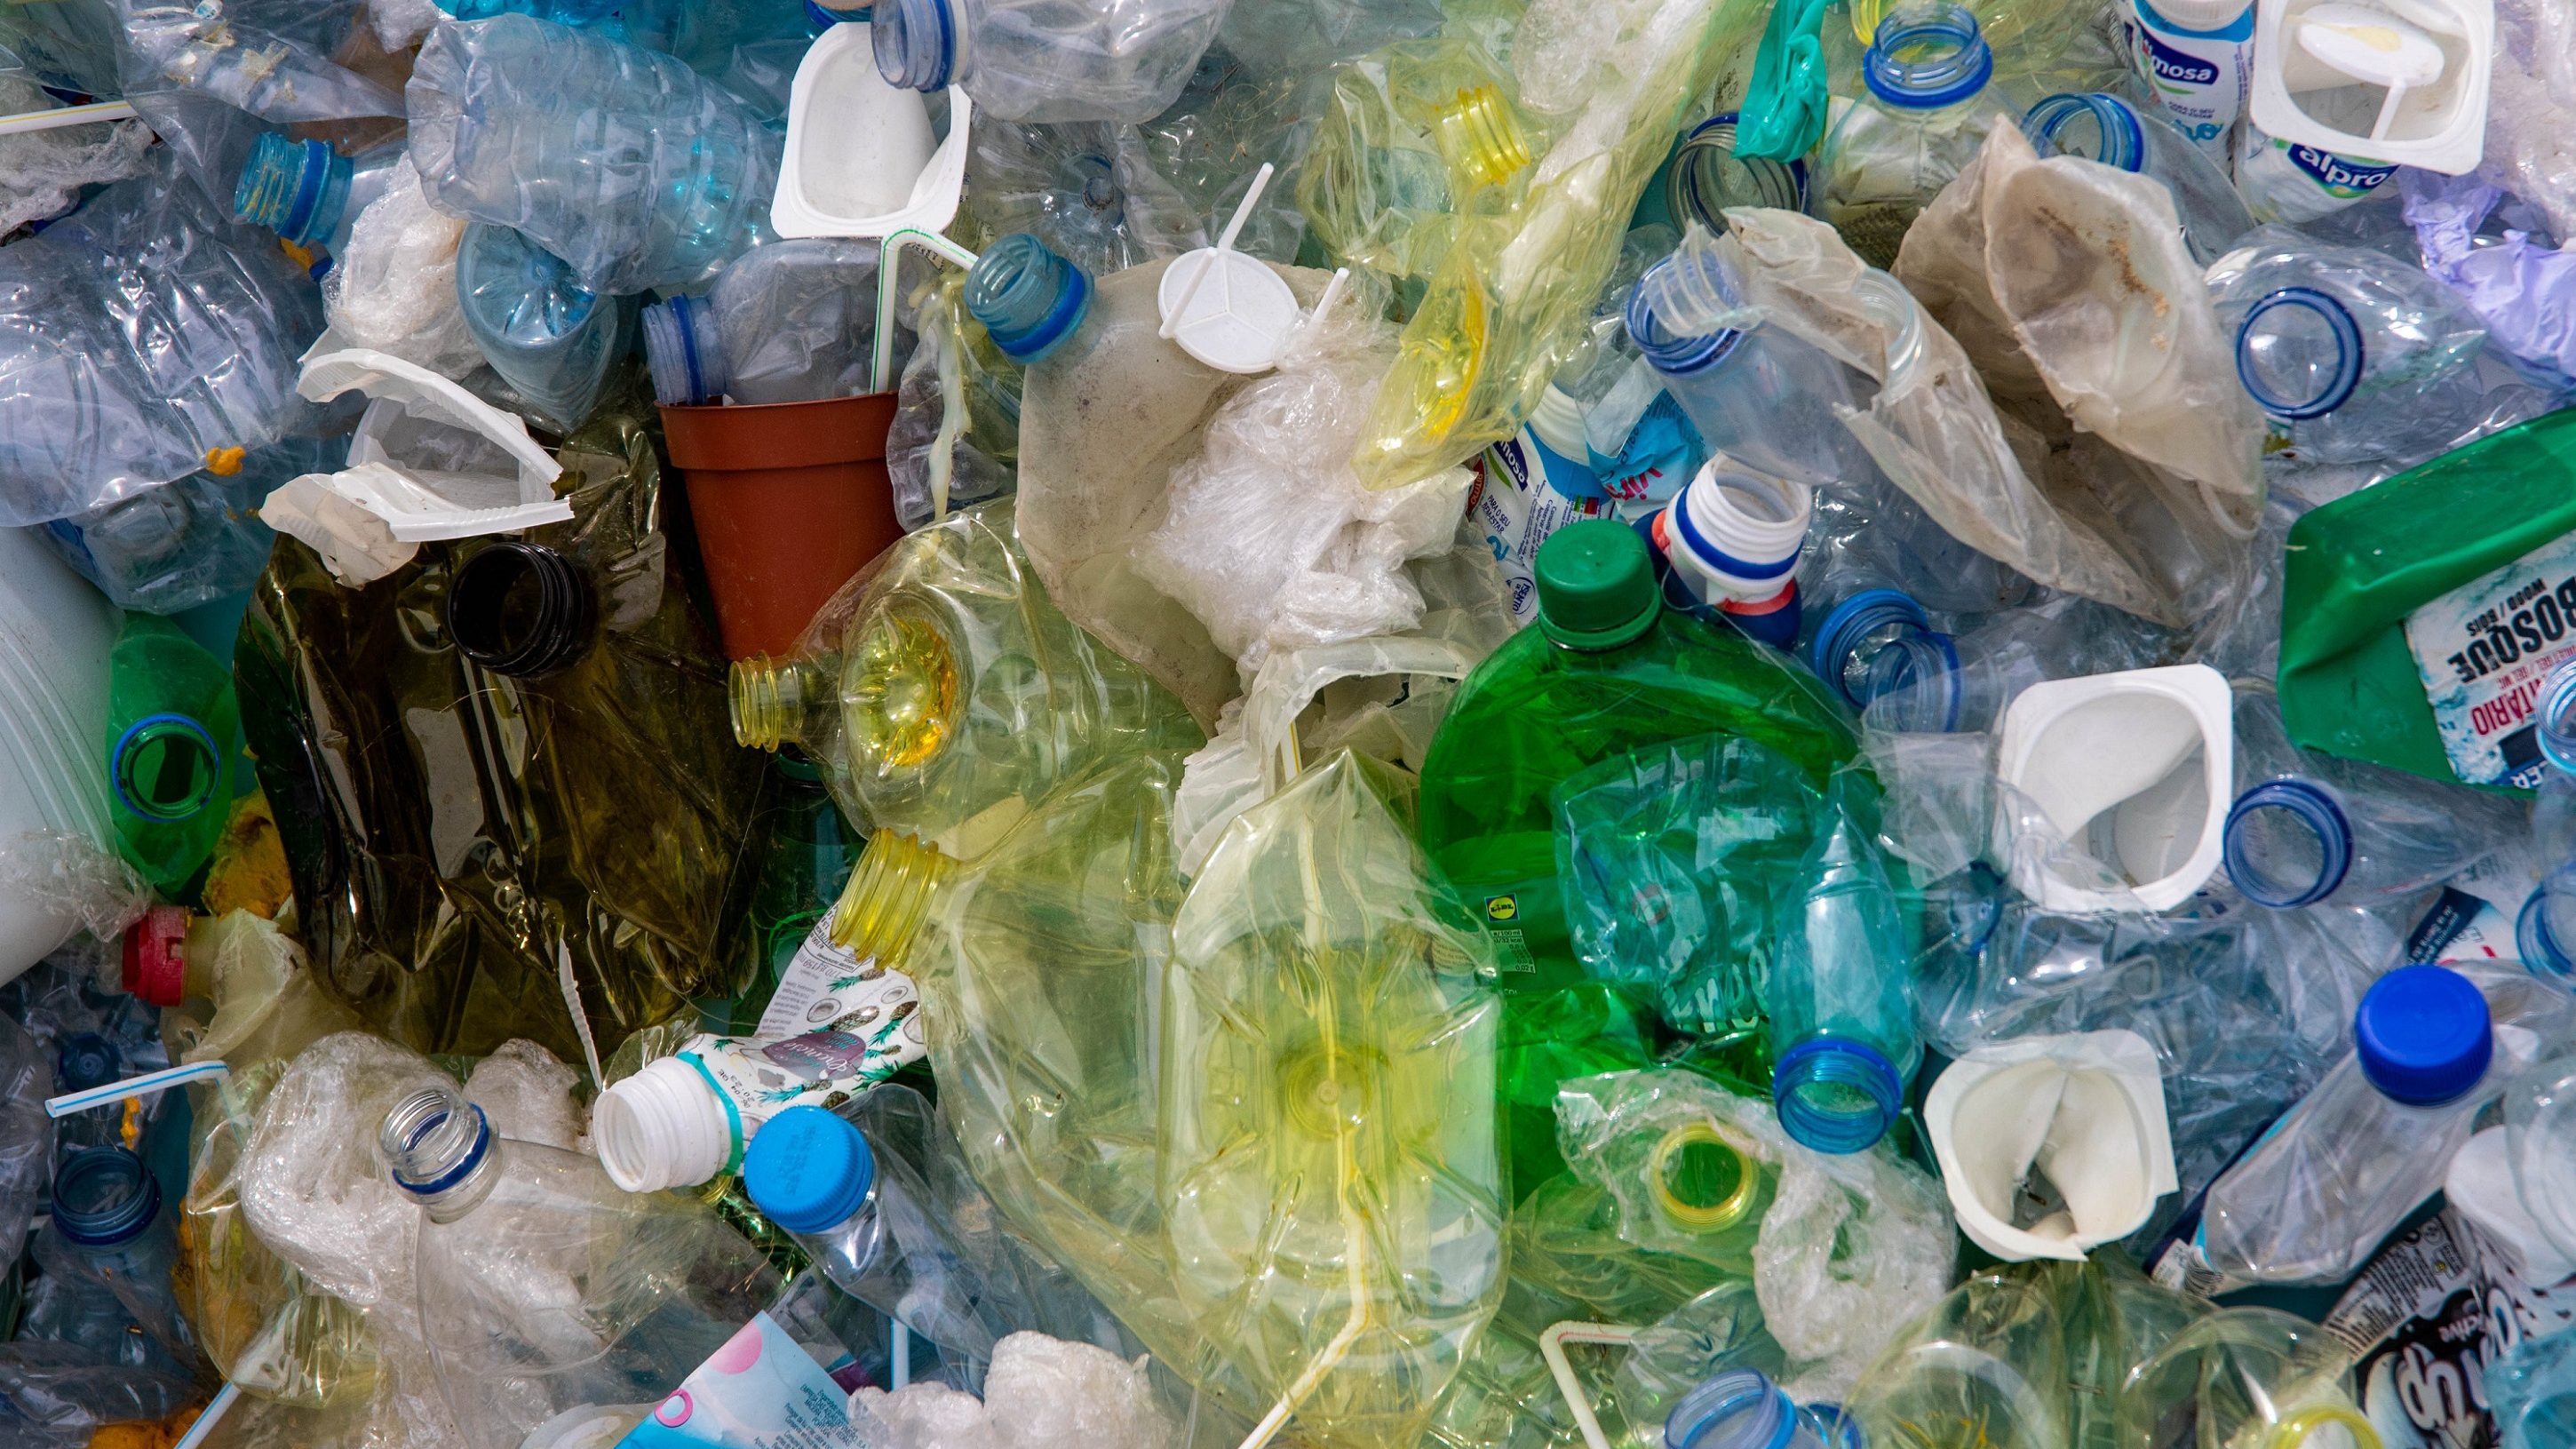 A jumble of plastic waste